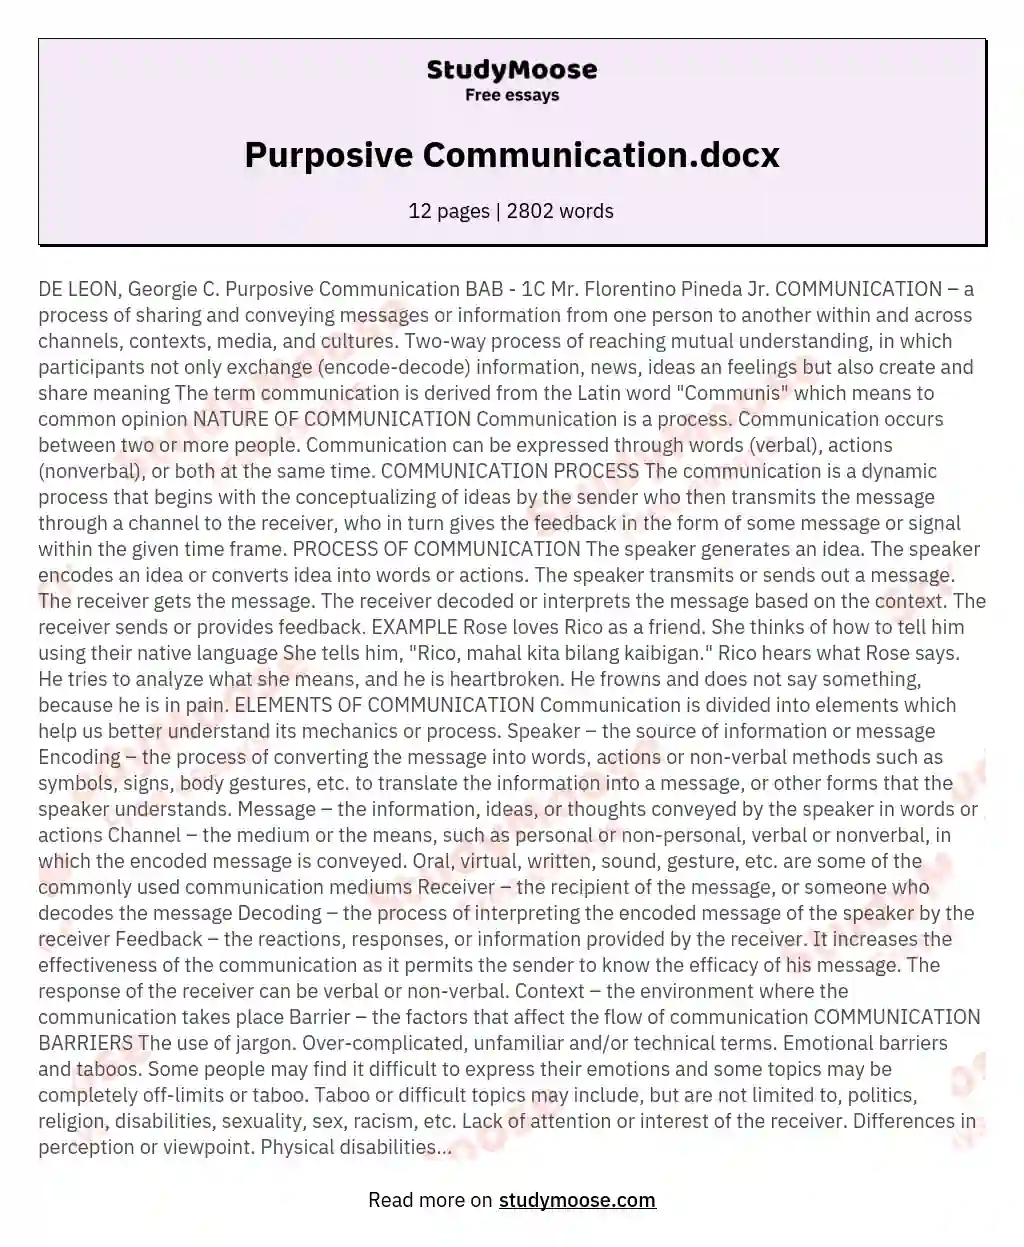 essay in purposive communication